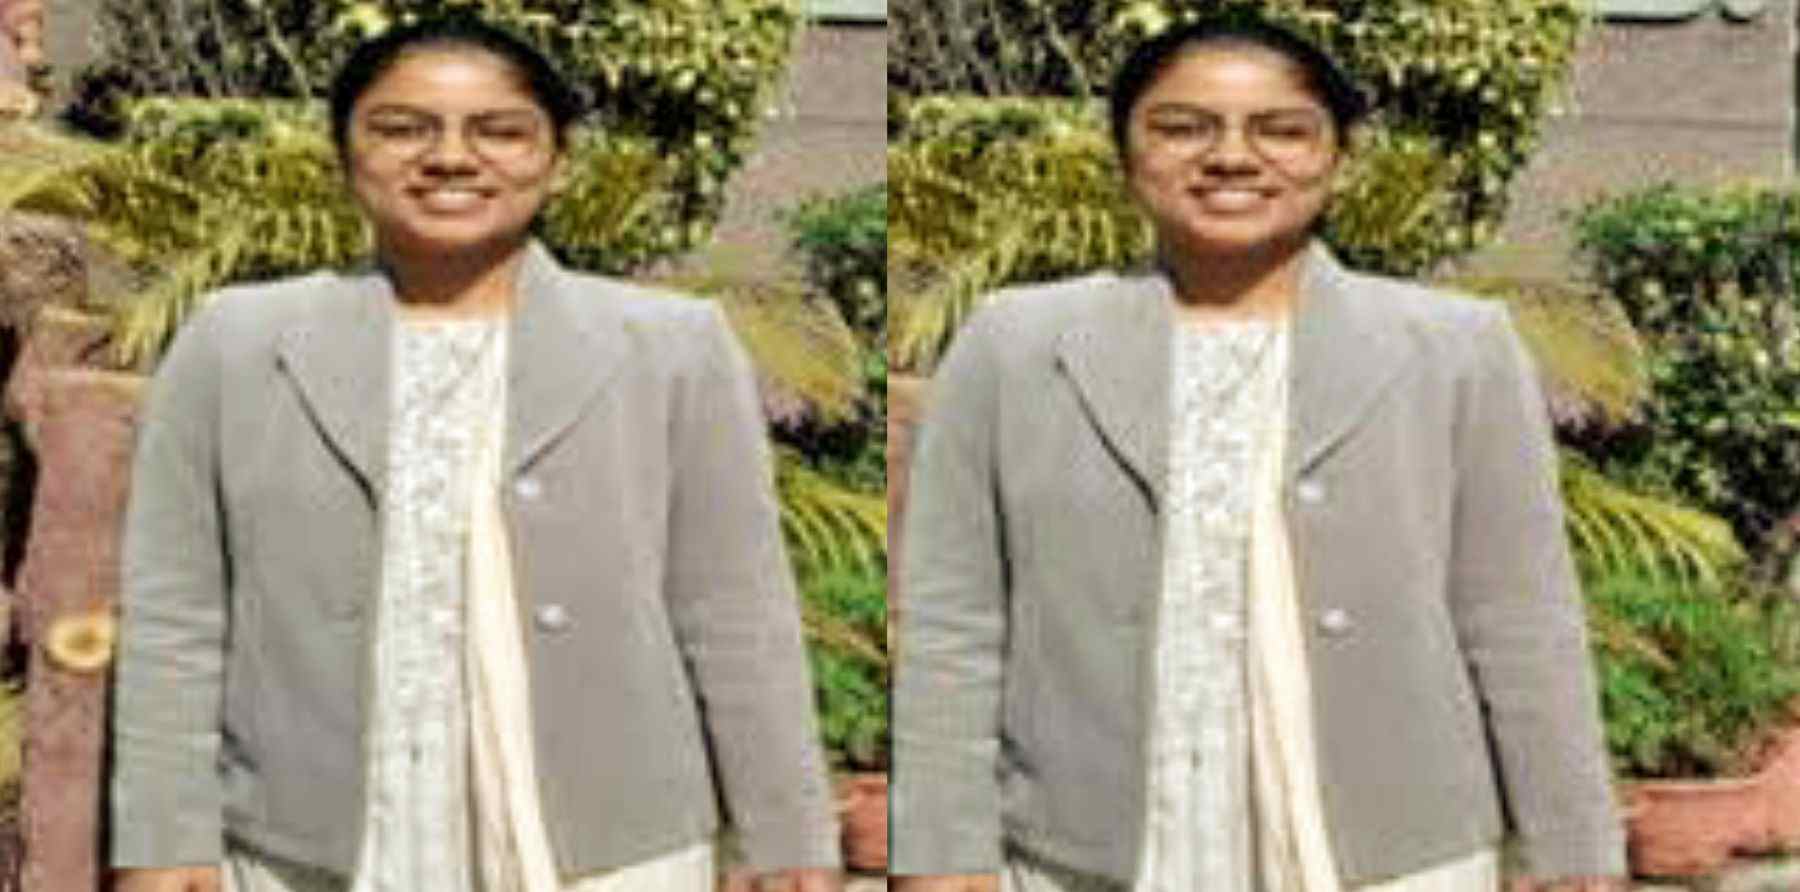 Uttarakhand news: Shreya Panwar of Rudraprayag became an agricultural scientist, achieved the first position in India. scientist Shreya Panwar Uttarakhand